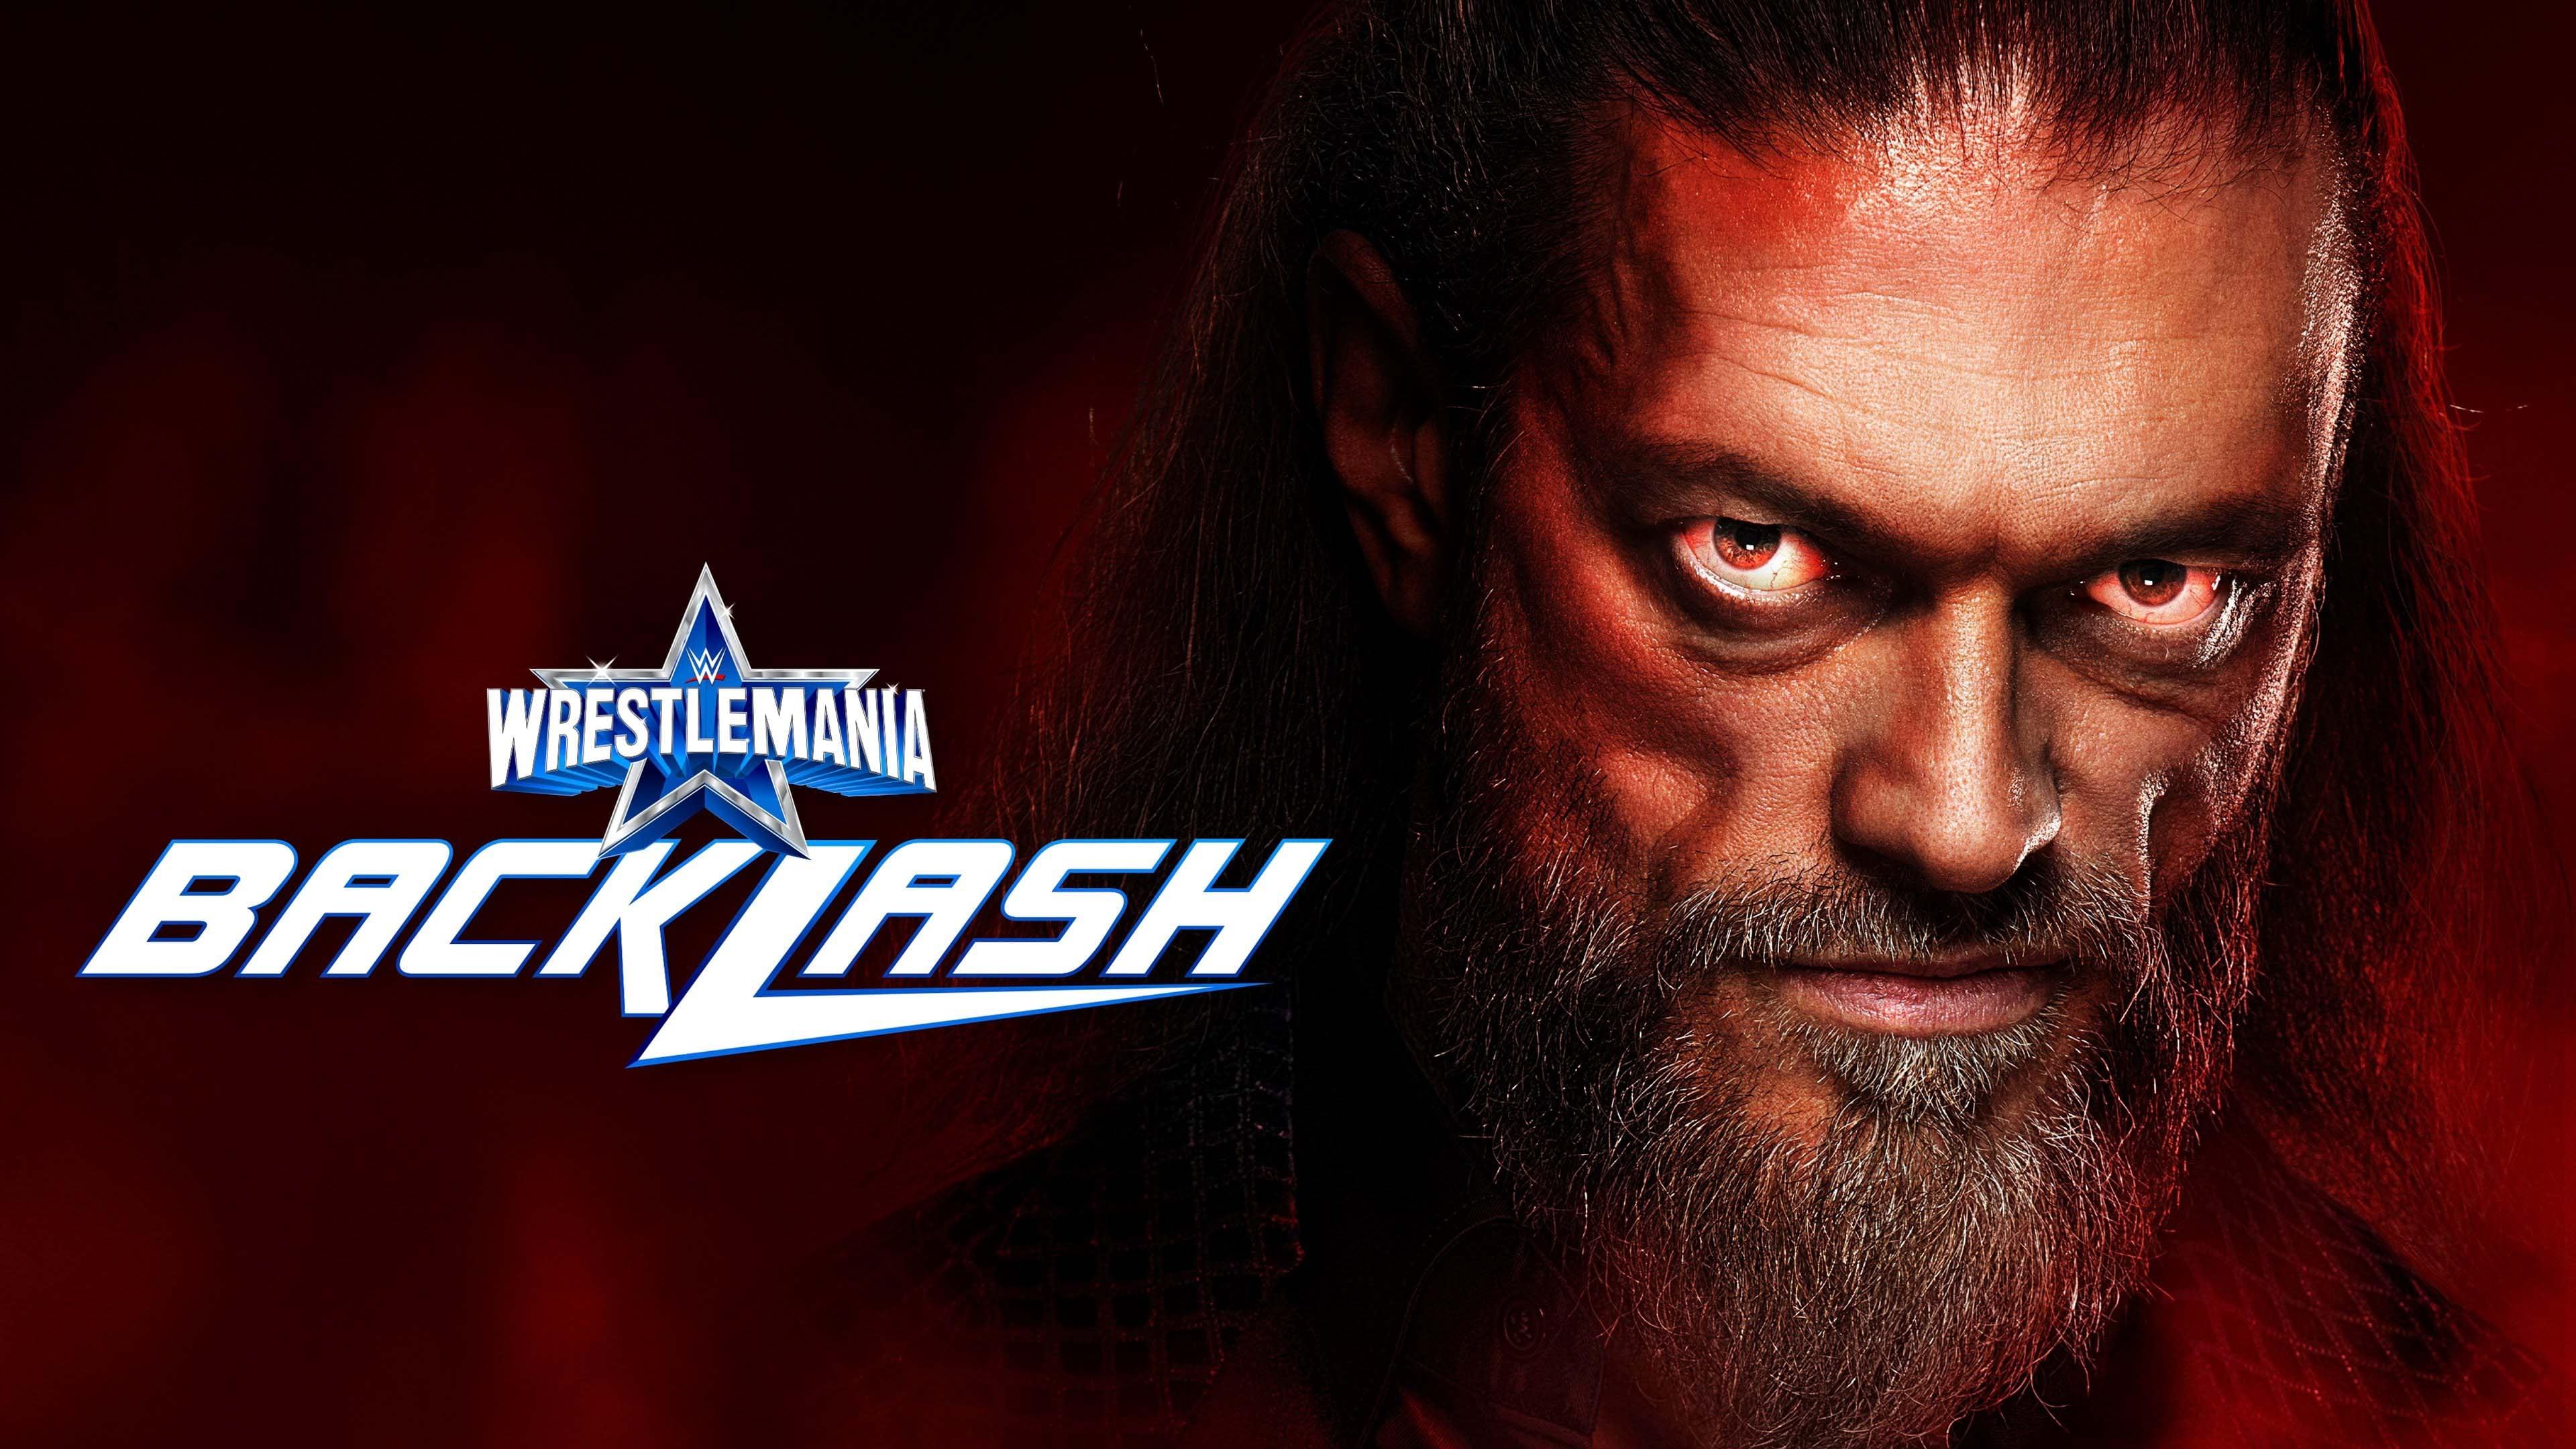 WWE WrestleMania Backlash 2022 backdrop